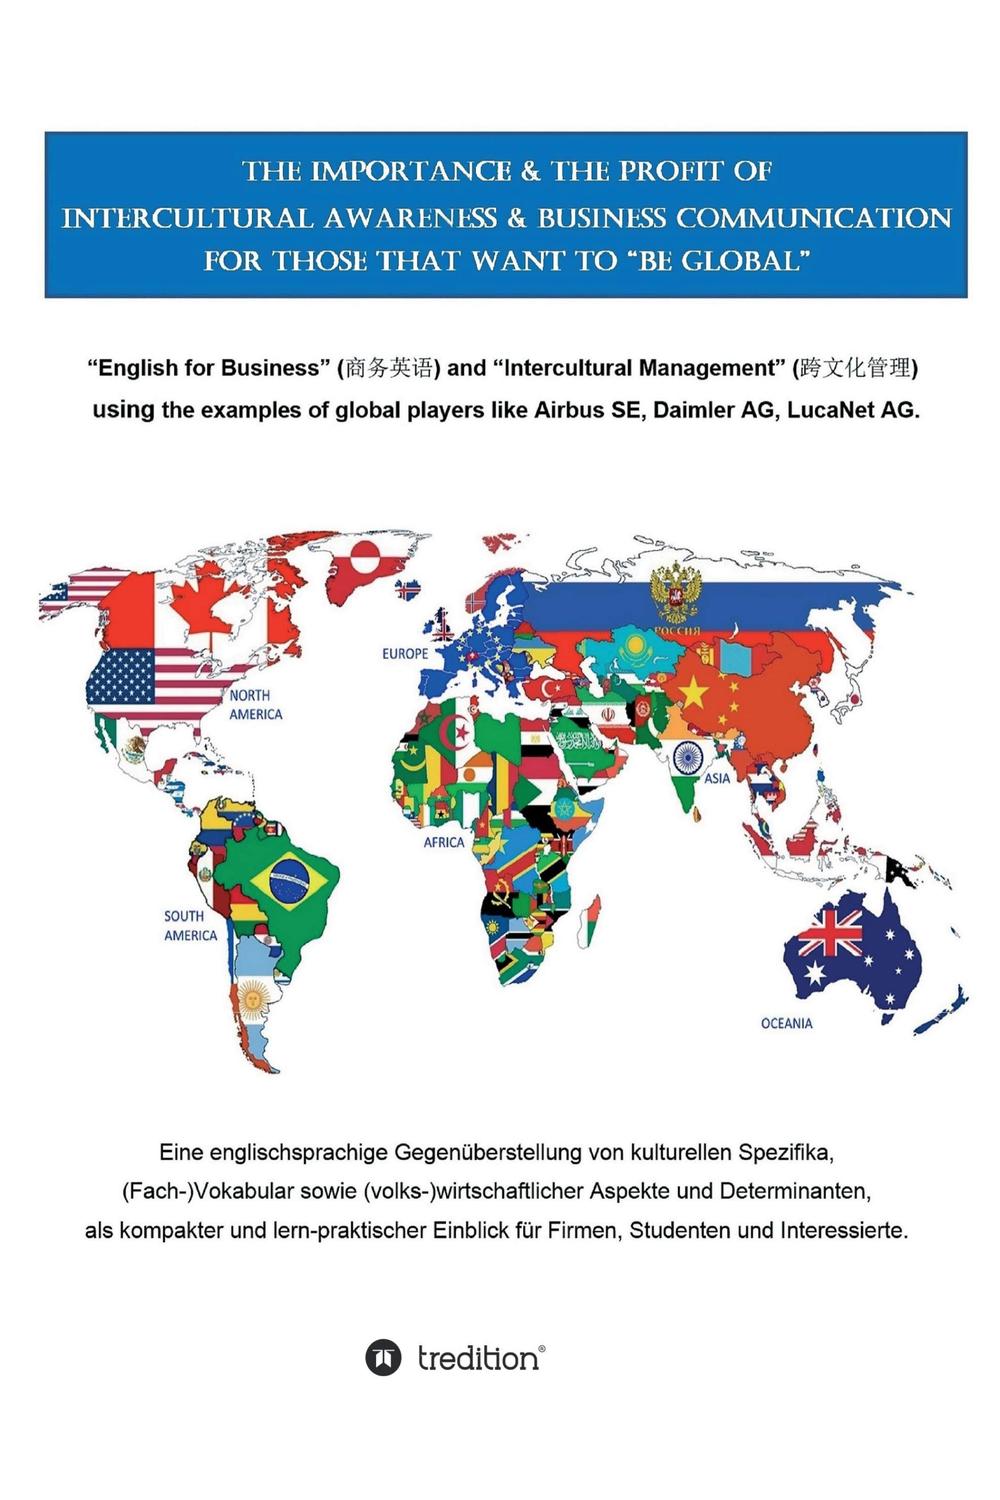 global awareness examples